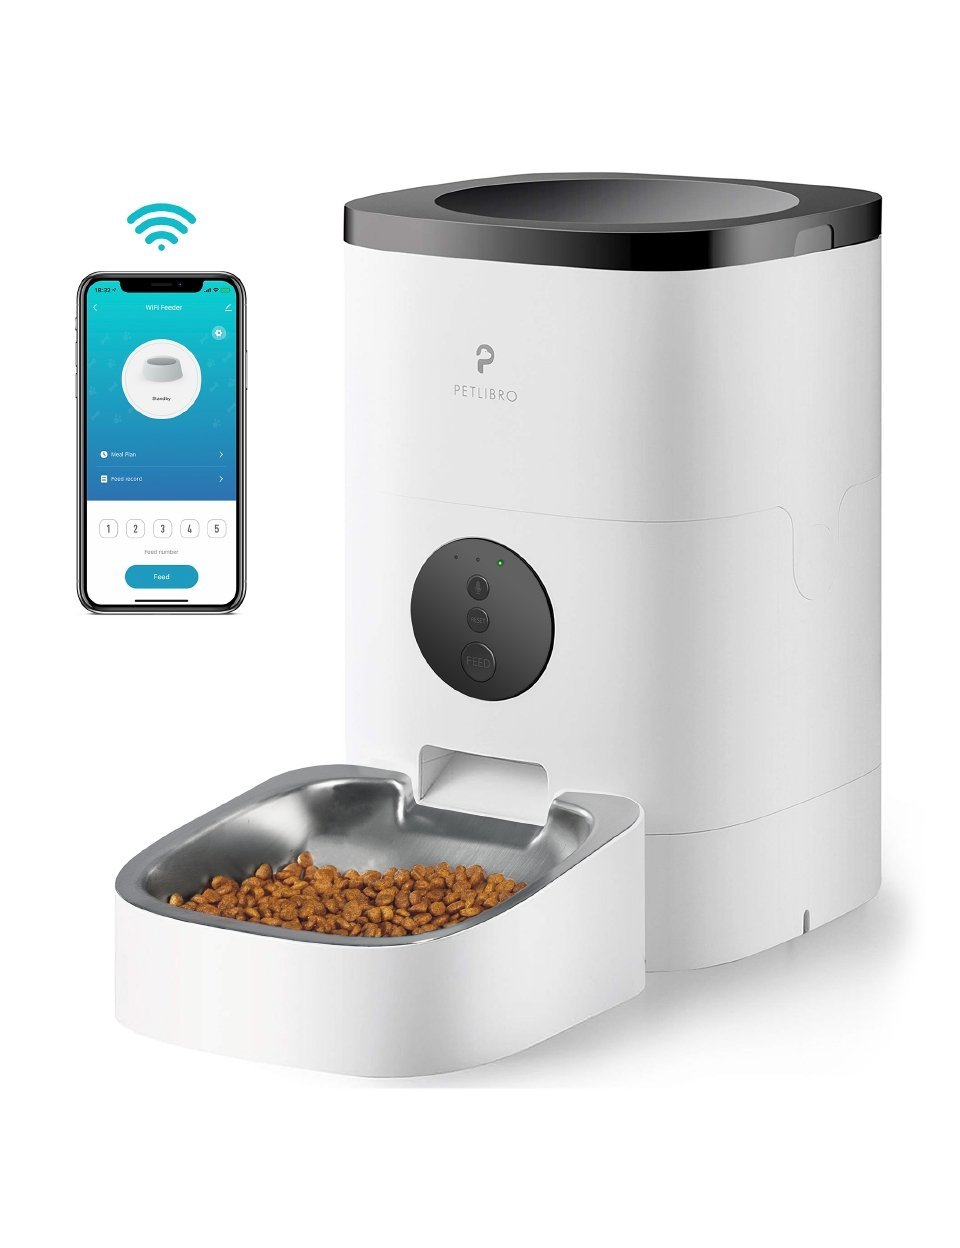 QLIFE Automatic Cat Dog Feeder: Dry Food Dispenser for Dog, Auto